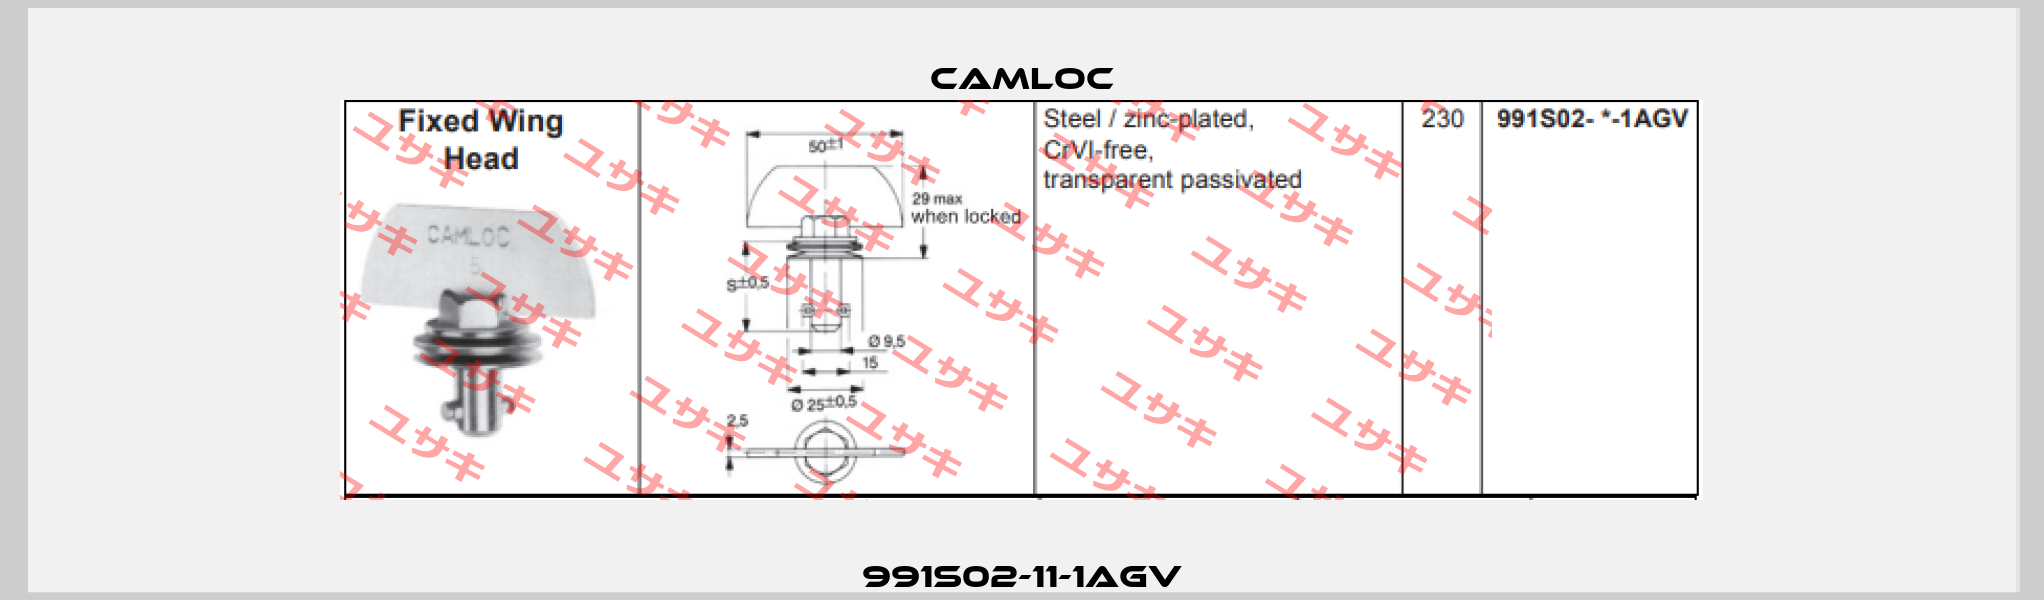 991S02-11-1AGV Camloc